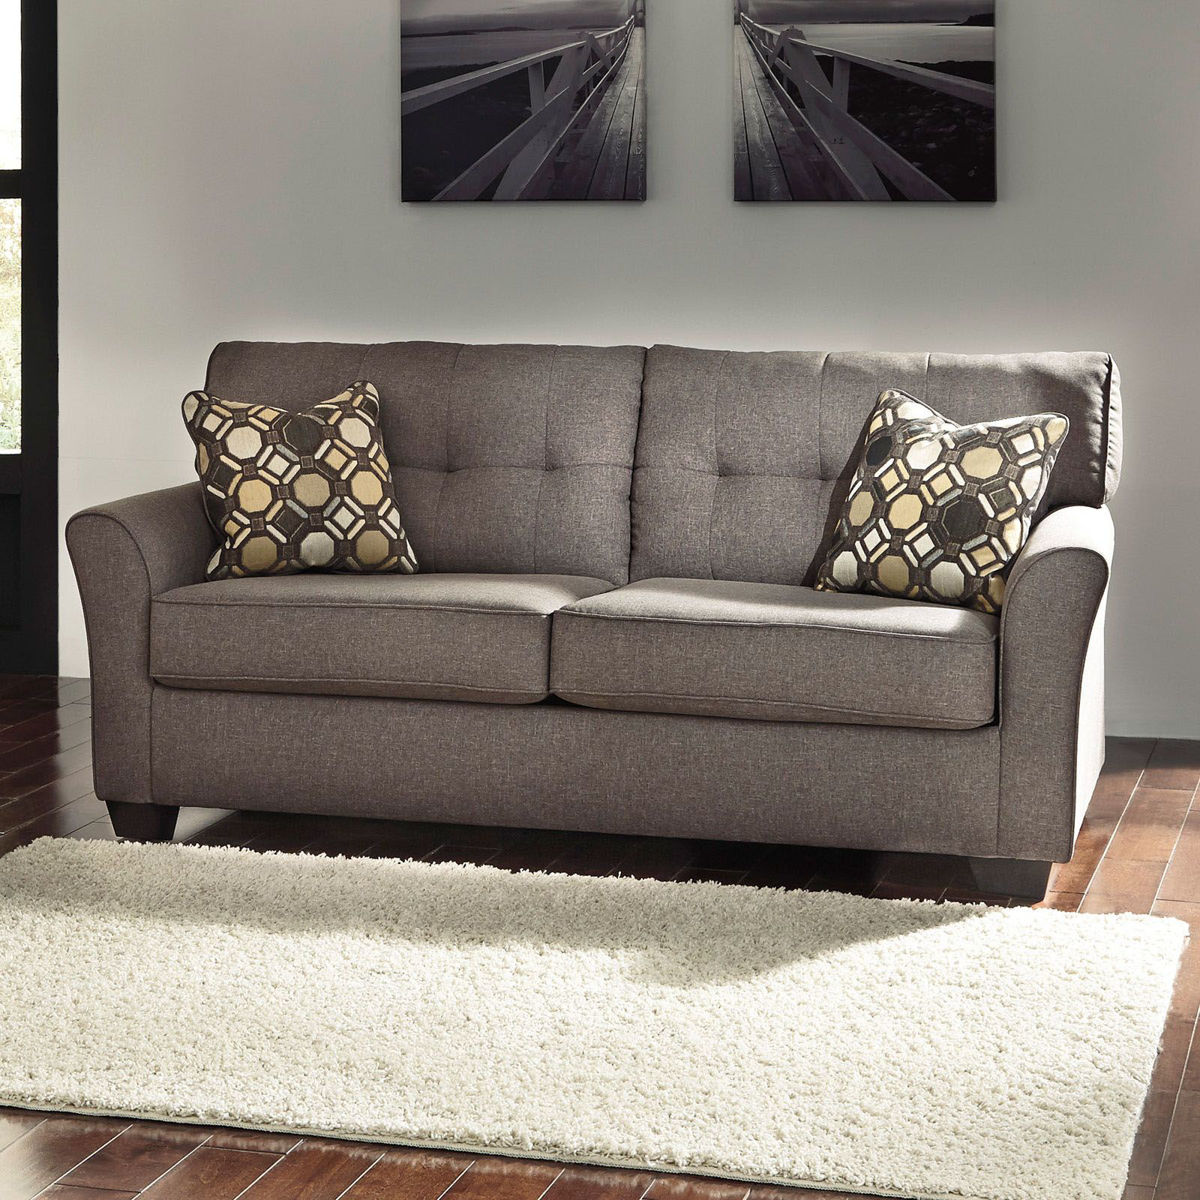 Picture of Tibbee Slate Sofa